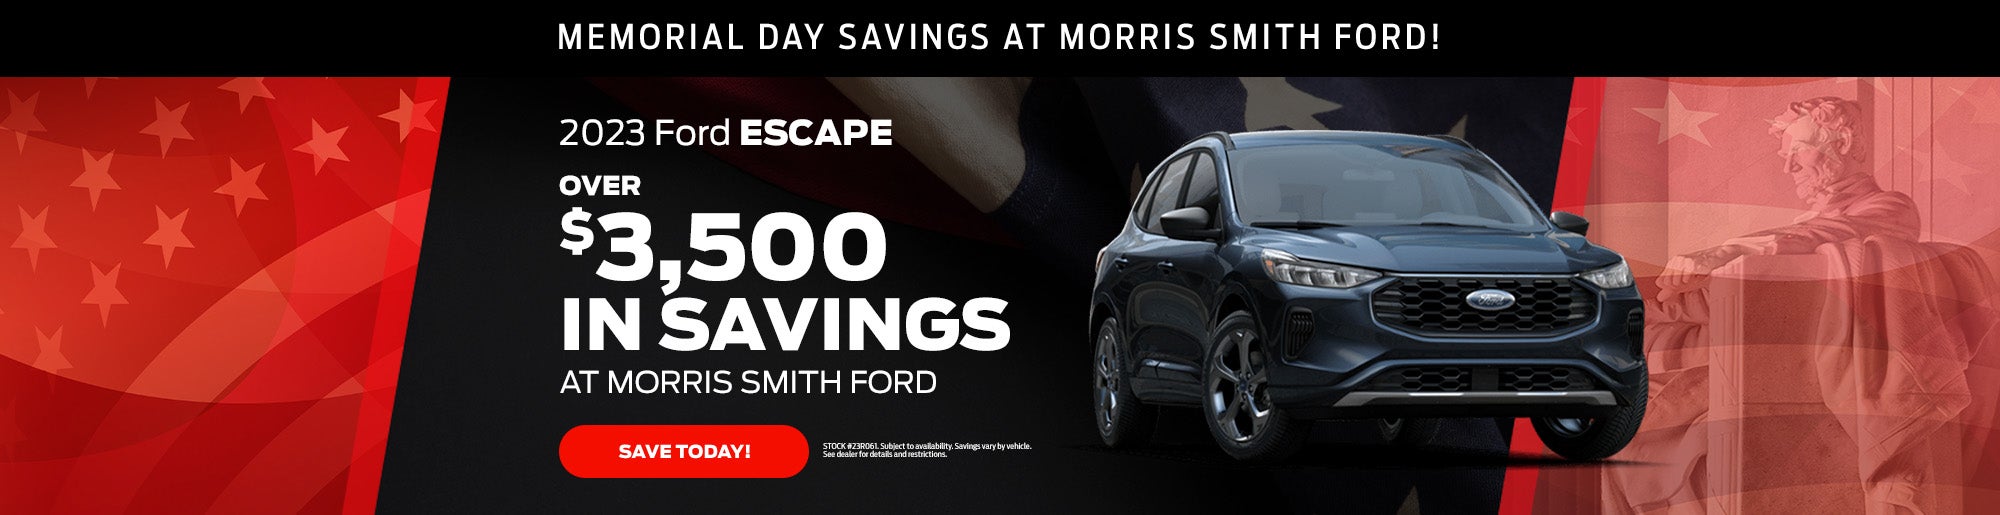 Ford Escape Memorial Day Savings